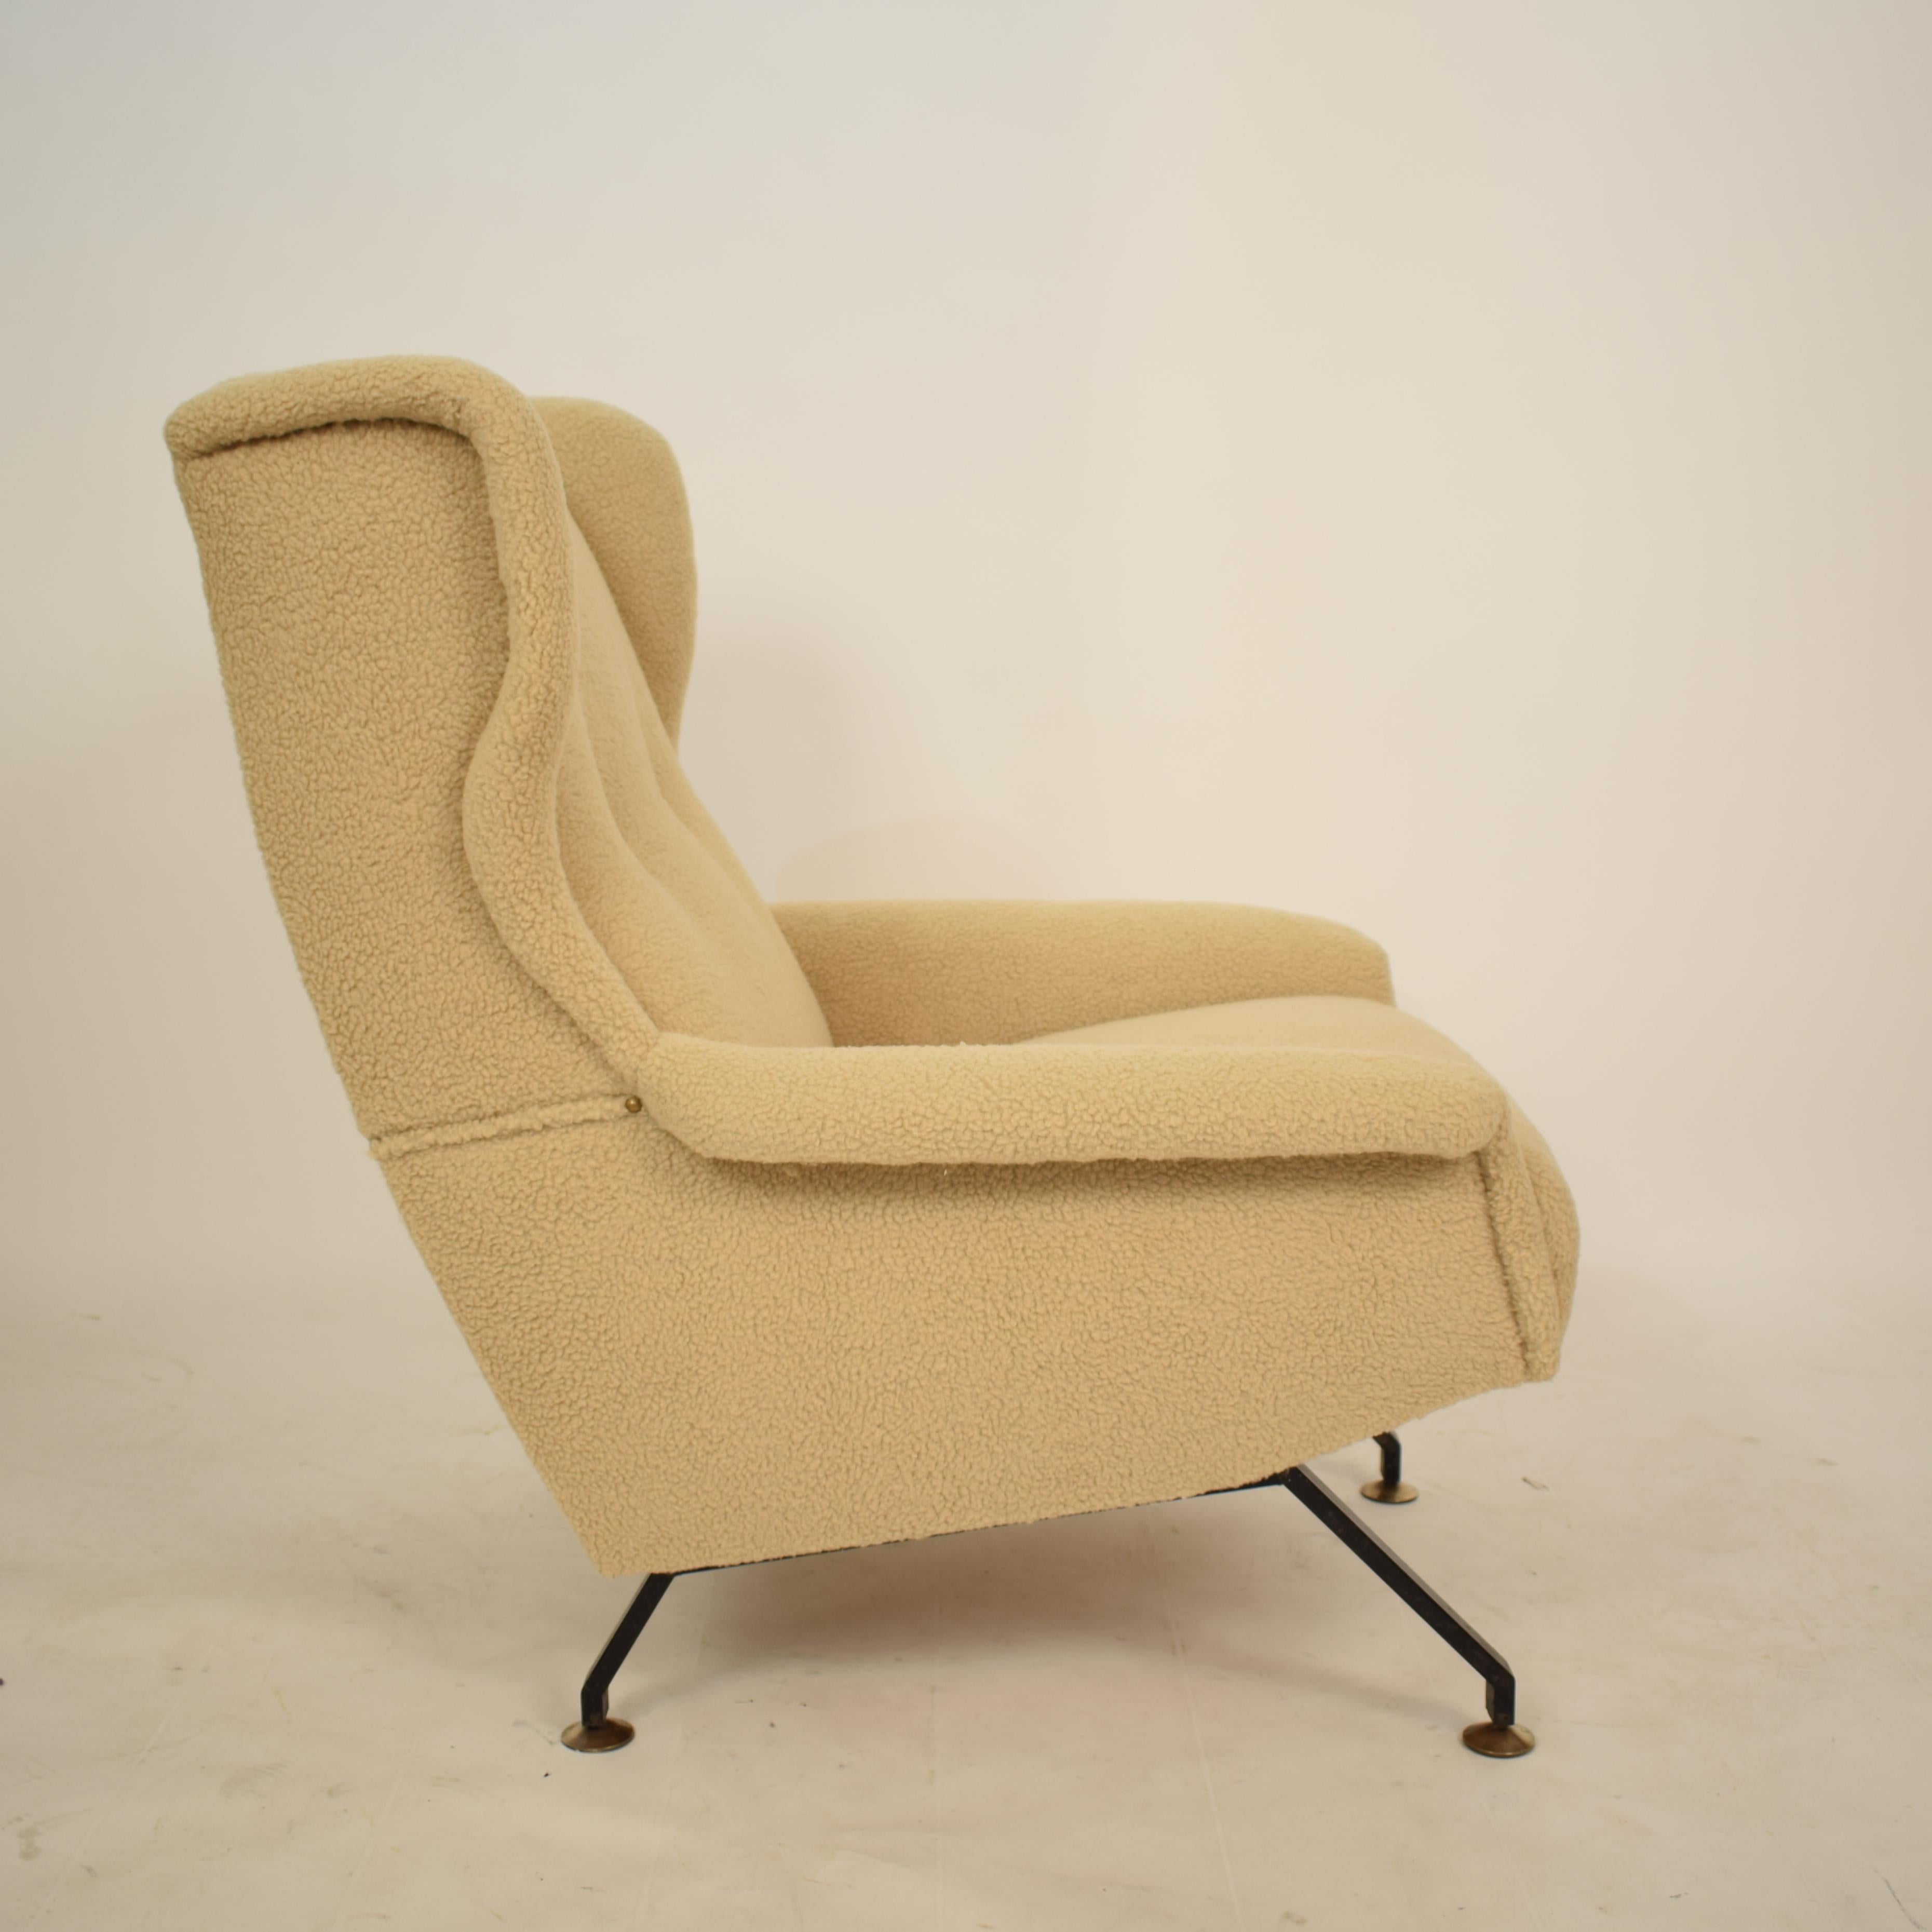 Mid-Century Modern Midcentury Italian Armchair Lounge Chair in Beige Sandy Sheep Wool Fabric, 1950